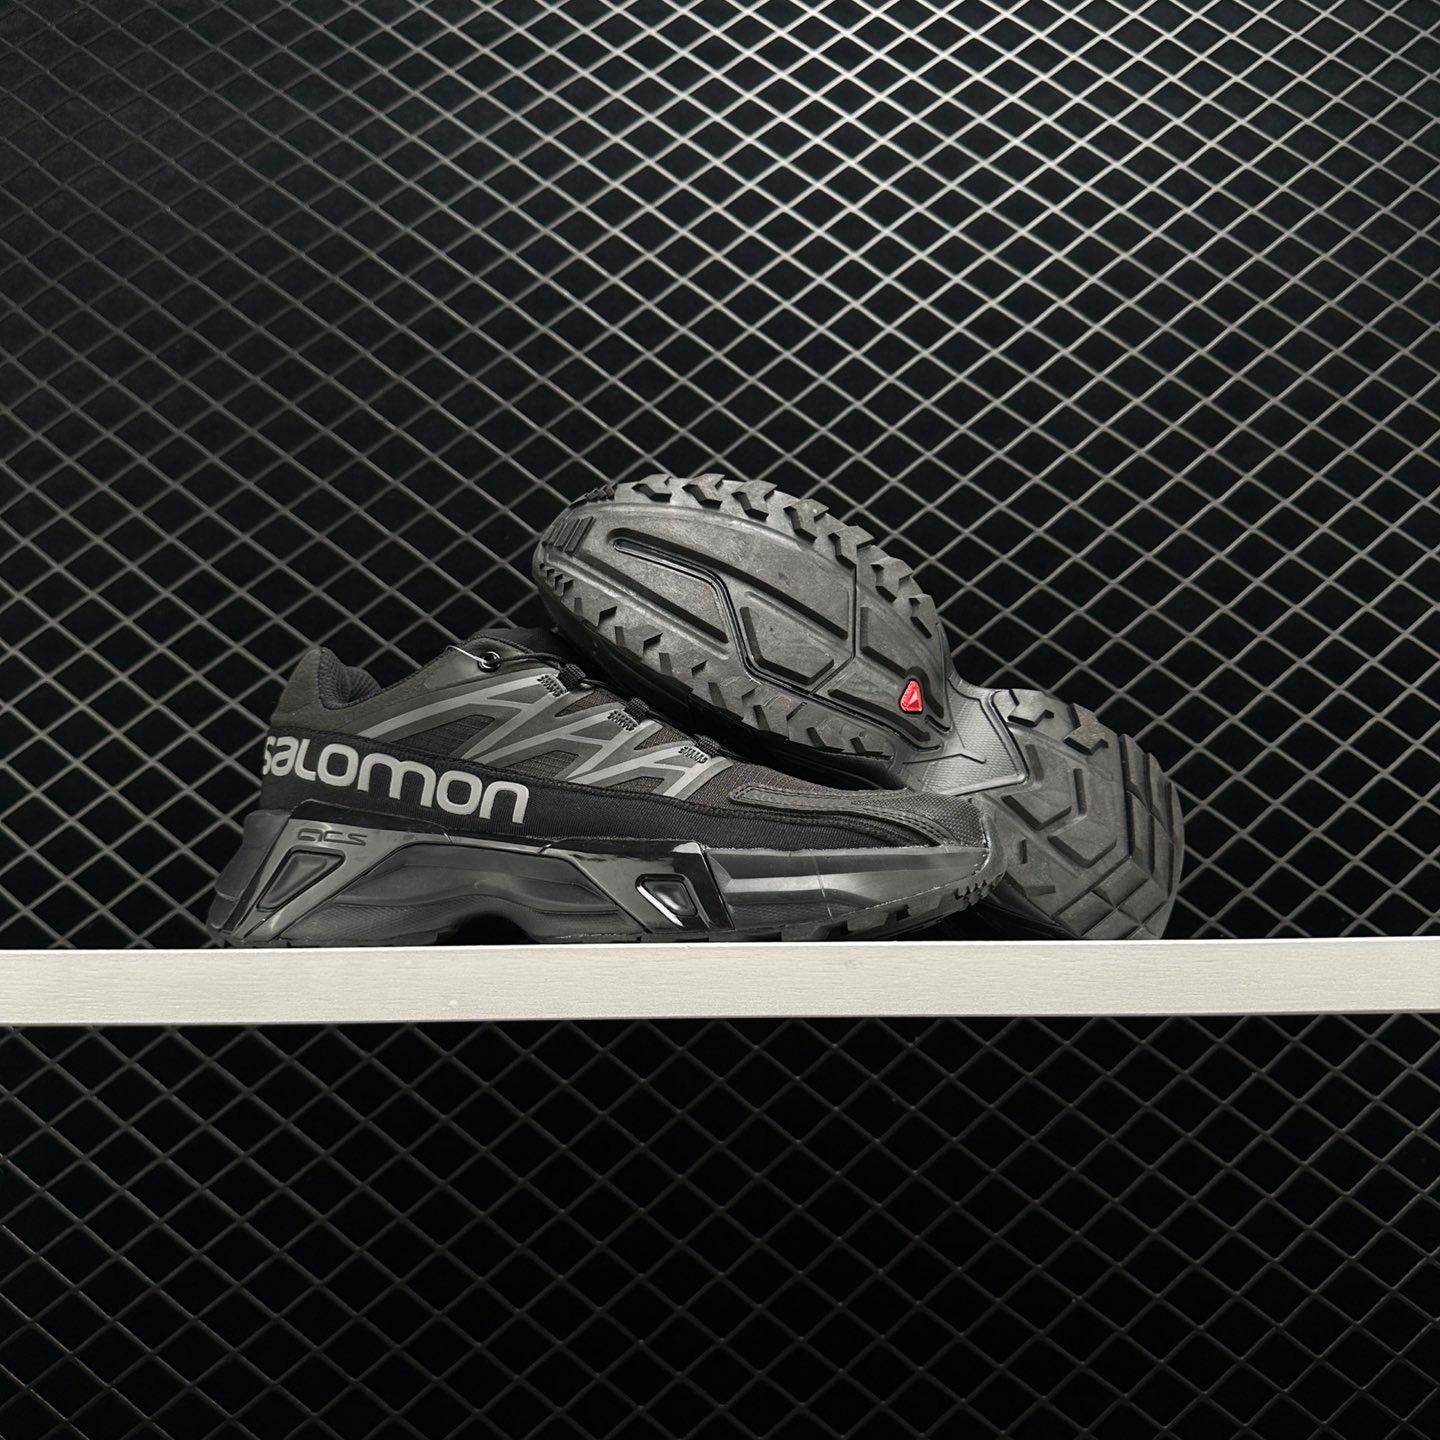 Salomon XT-Street Professional Black: High-Performance Athletic Shoes